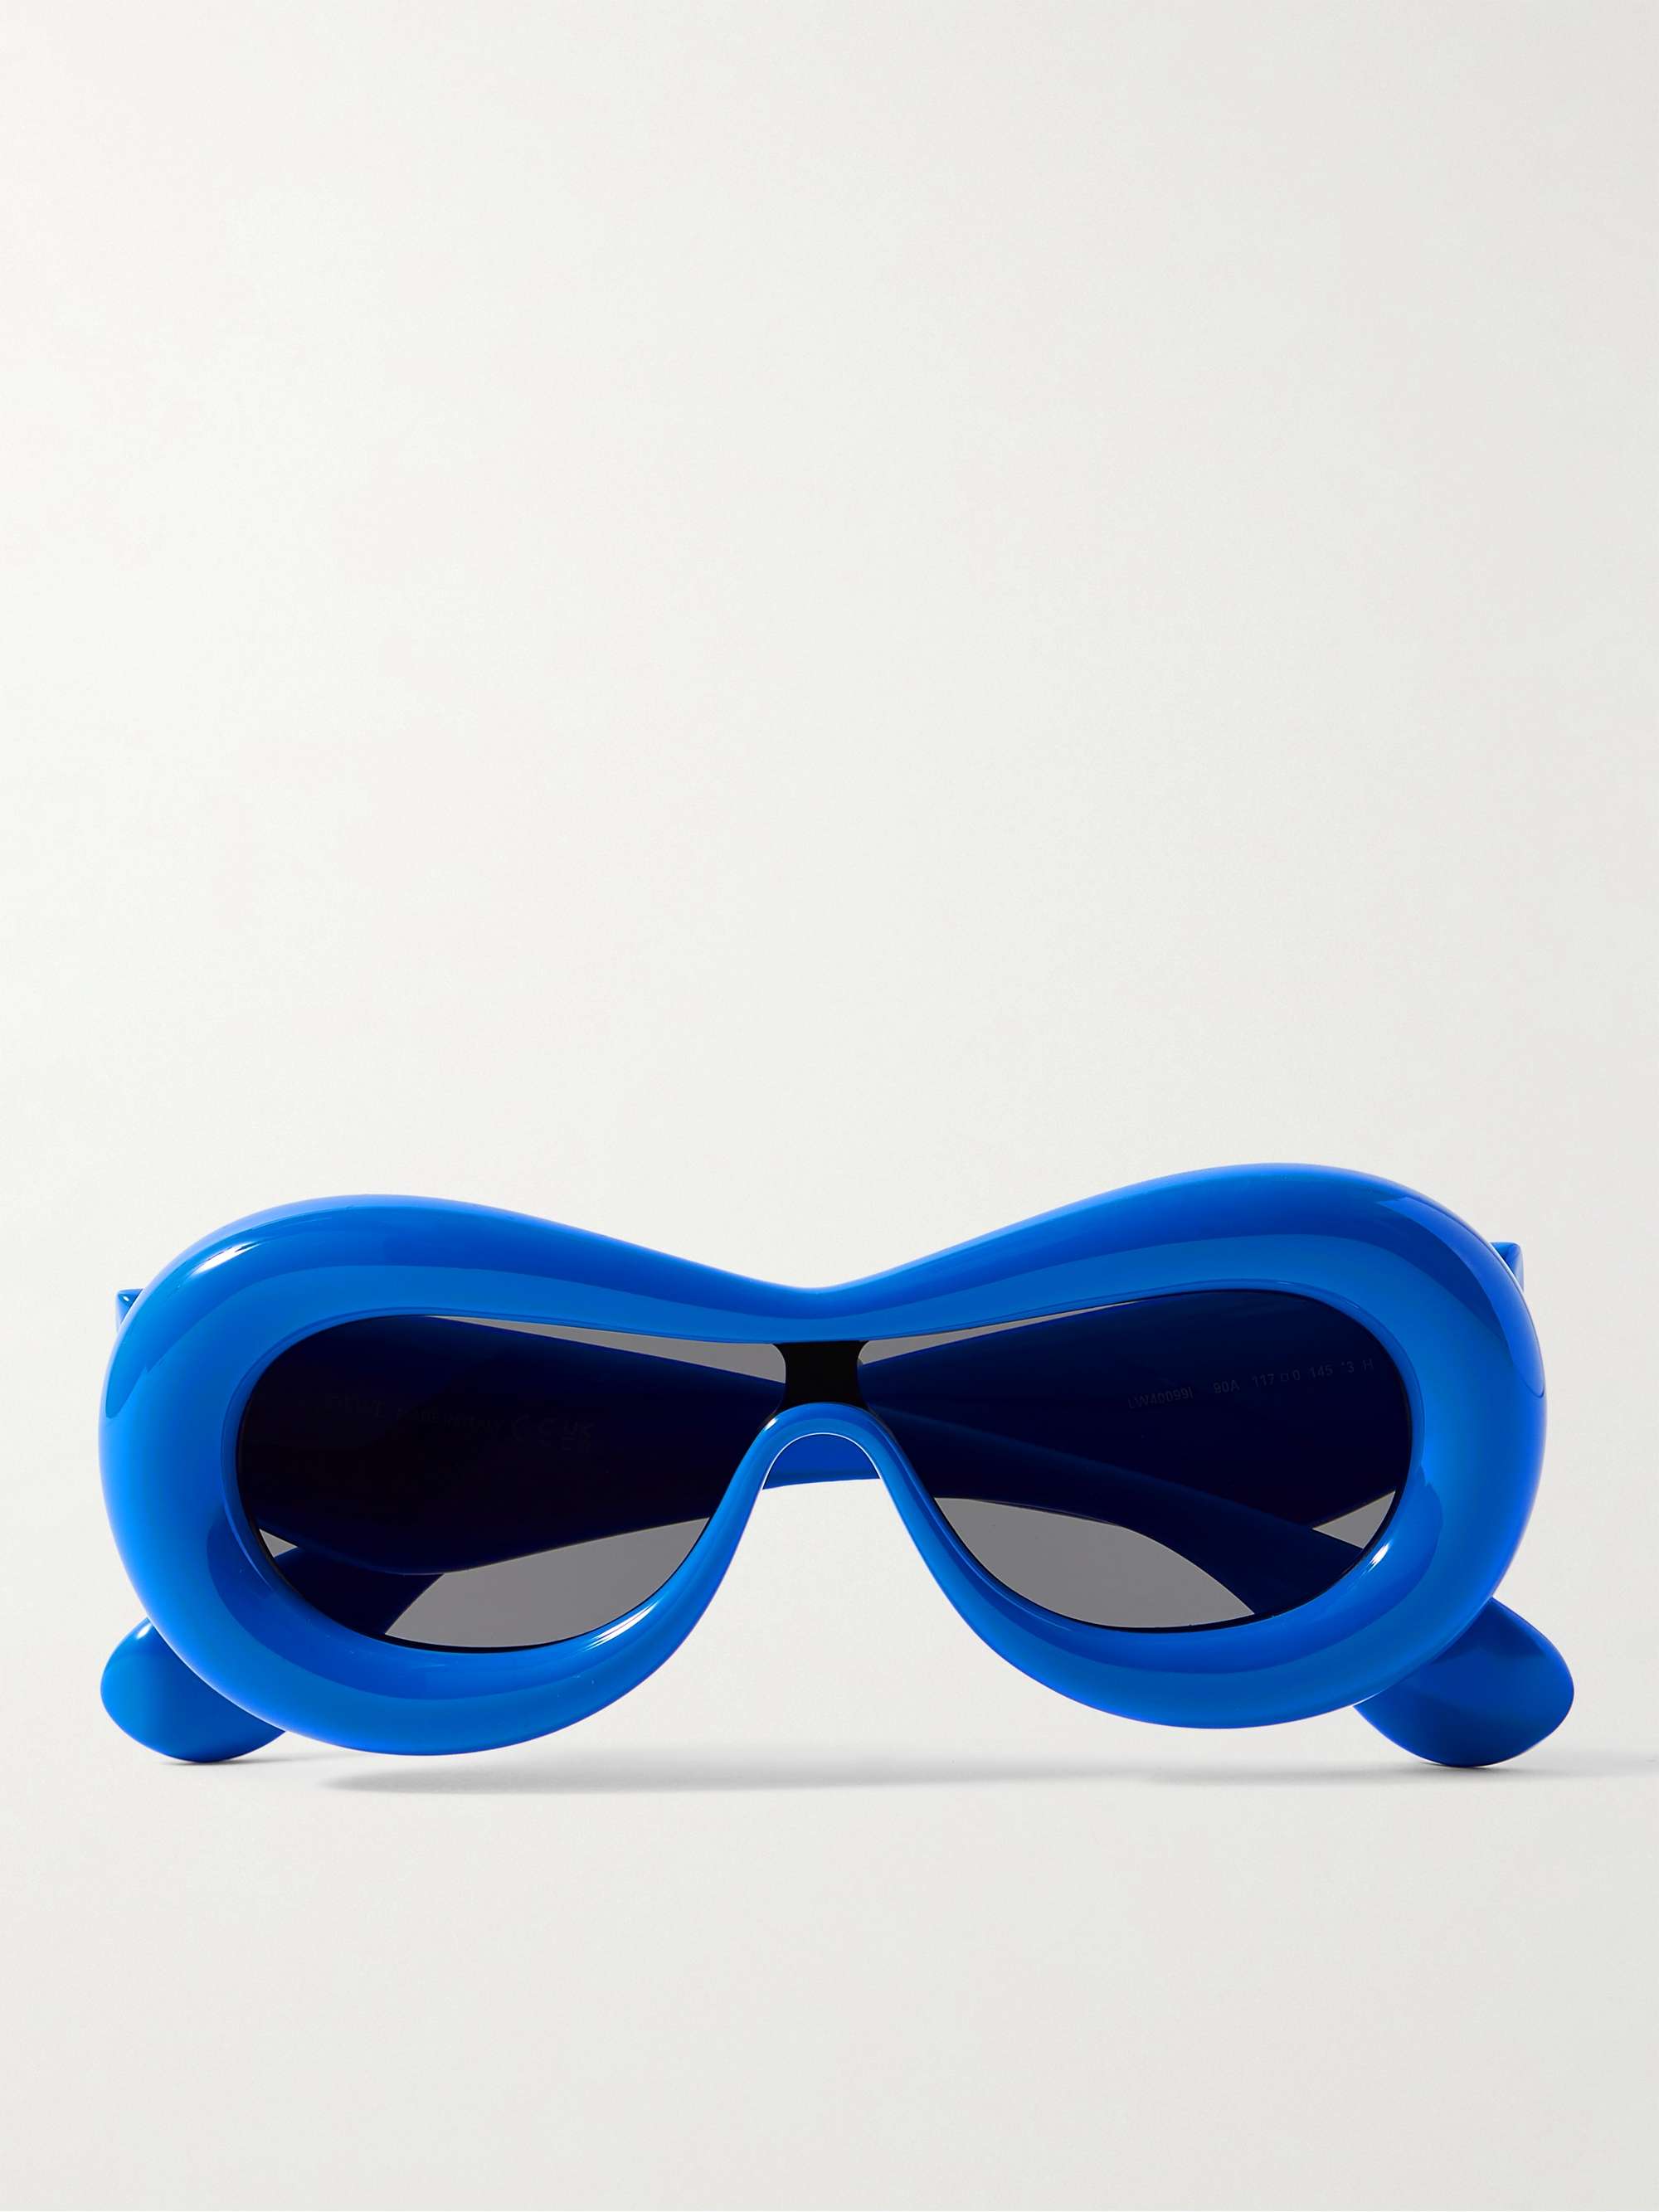 LOEWE Round-Frame Acetate Sunglasses